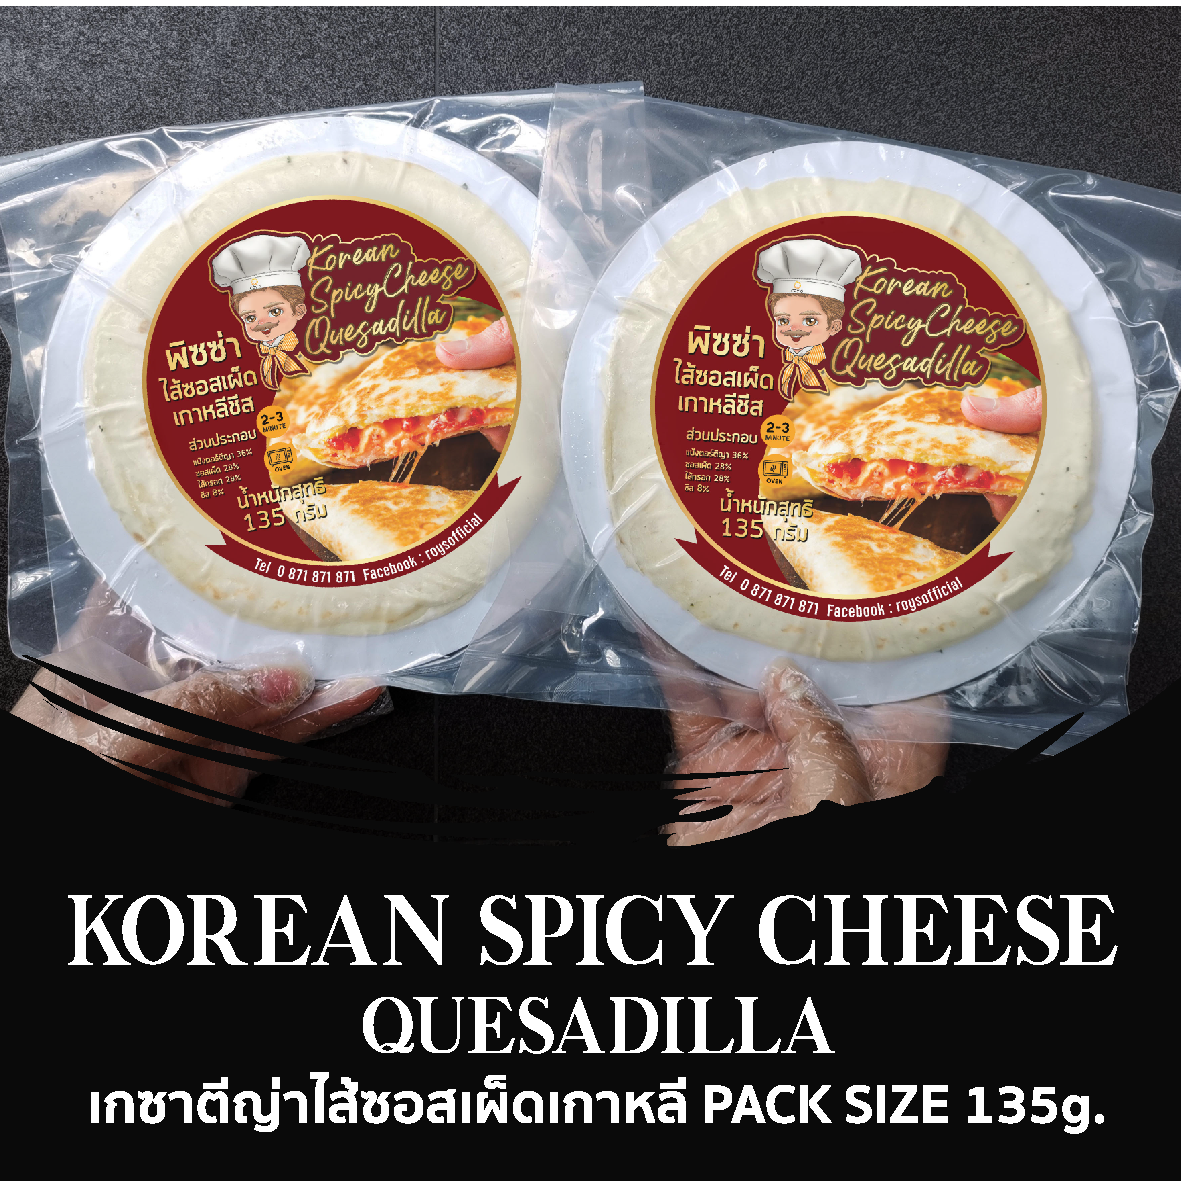 Korean Spicy Cheese Quesadilla